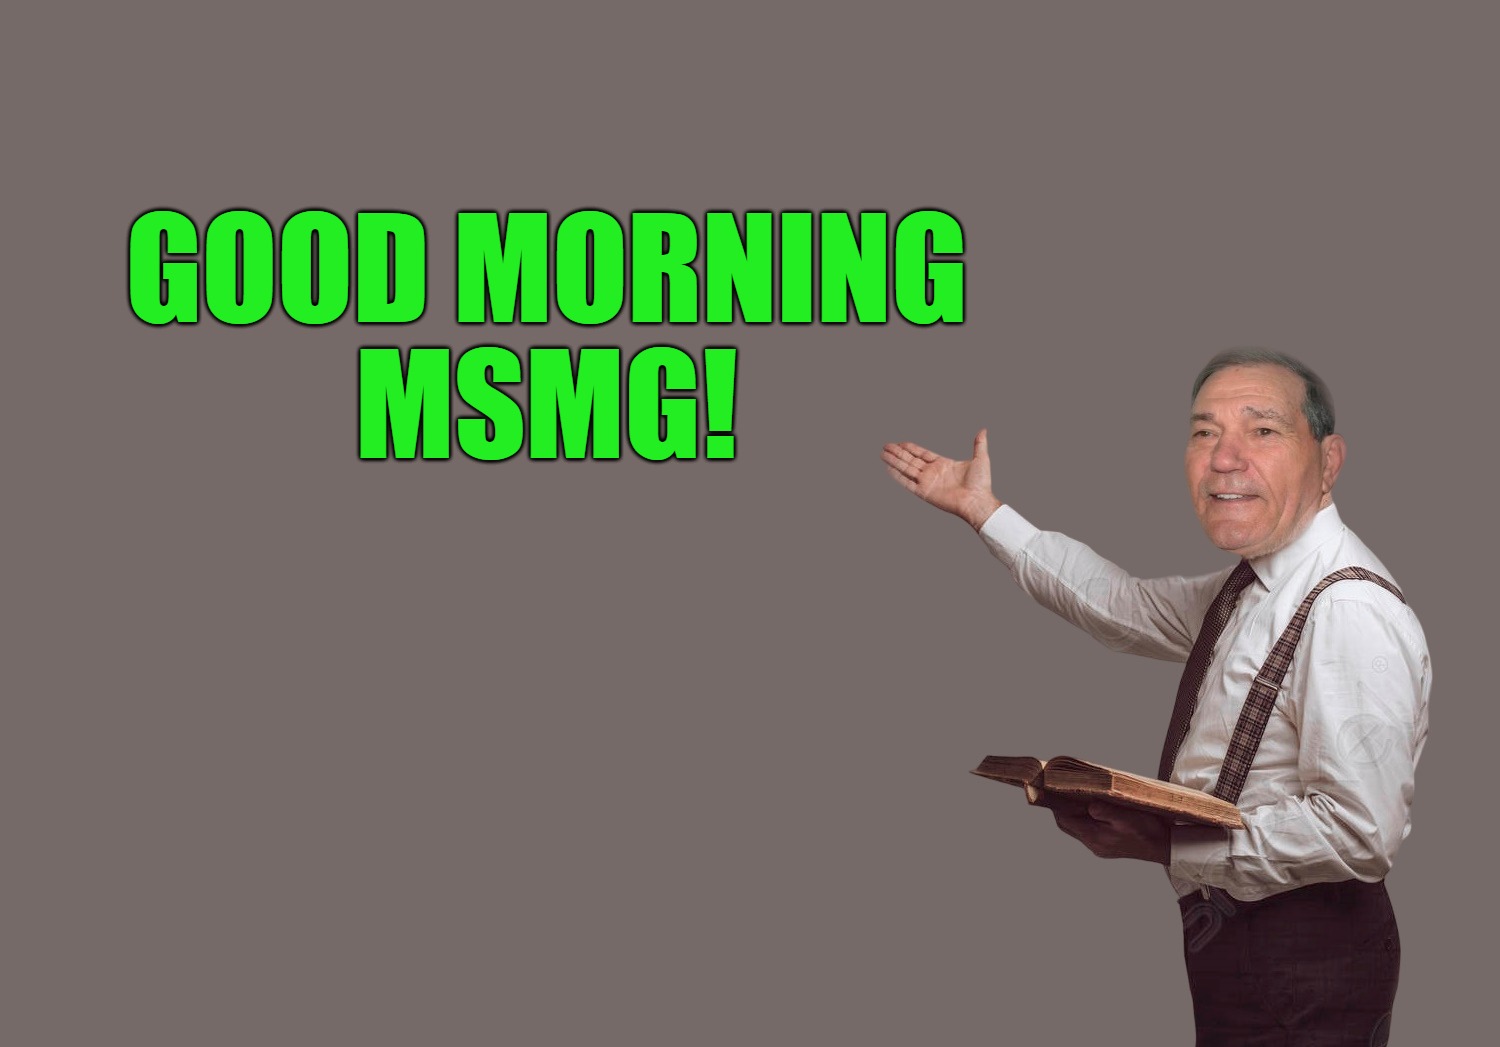 good morning | GOOD MORNING
MSMG! | image tagged in good morning,kewlew | made w/ Imgflip meme maker